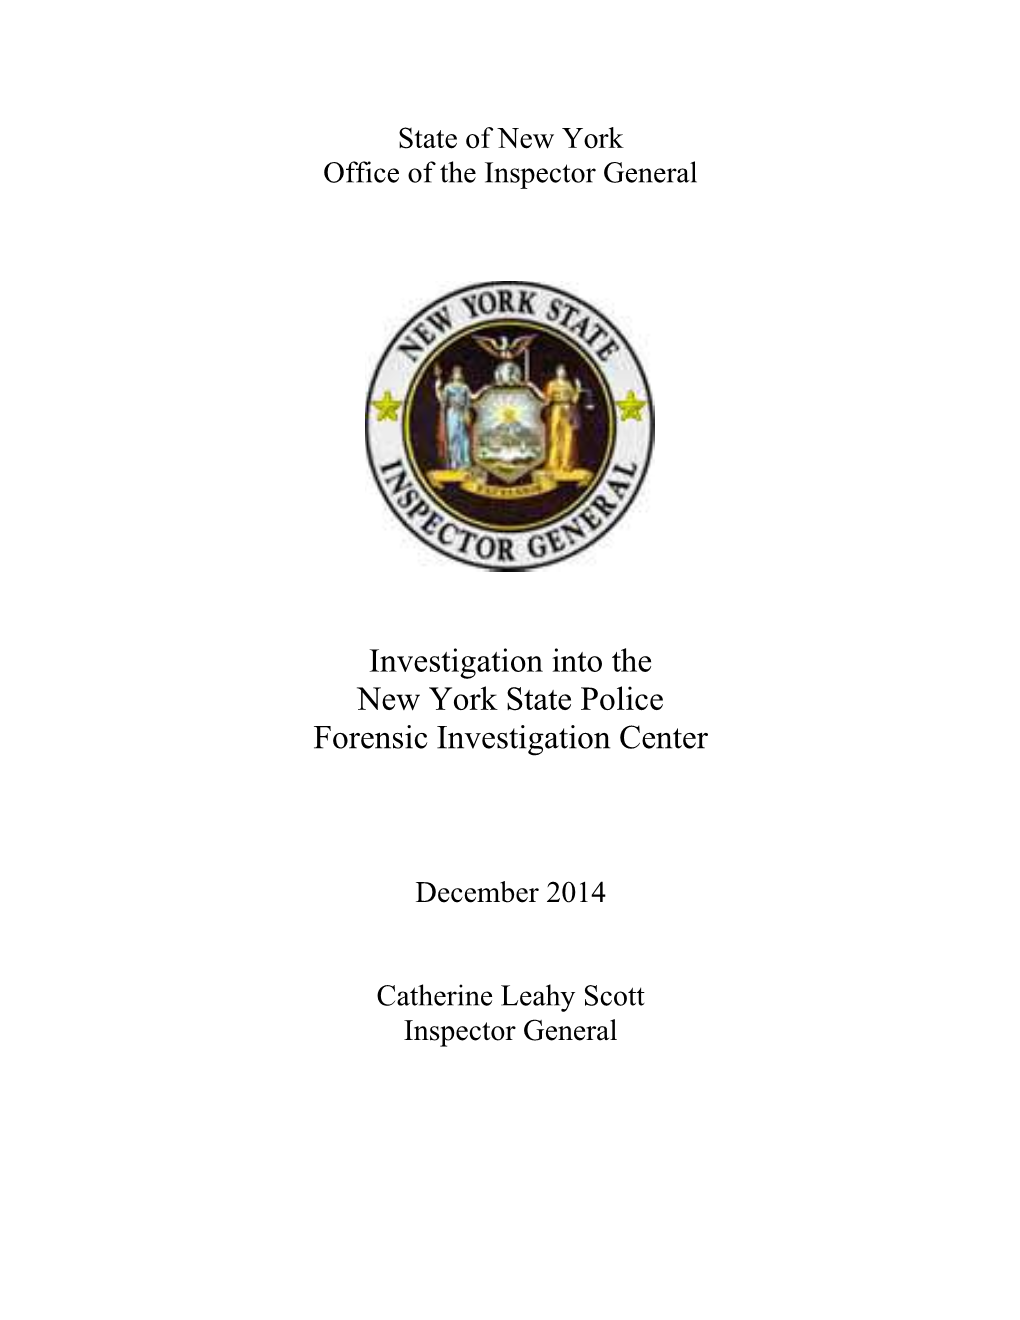 Investigation Into the New York State Police Forensic Investigati